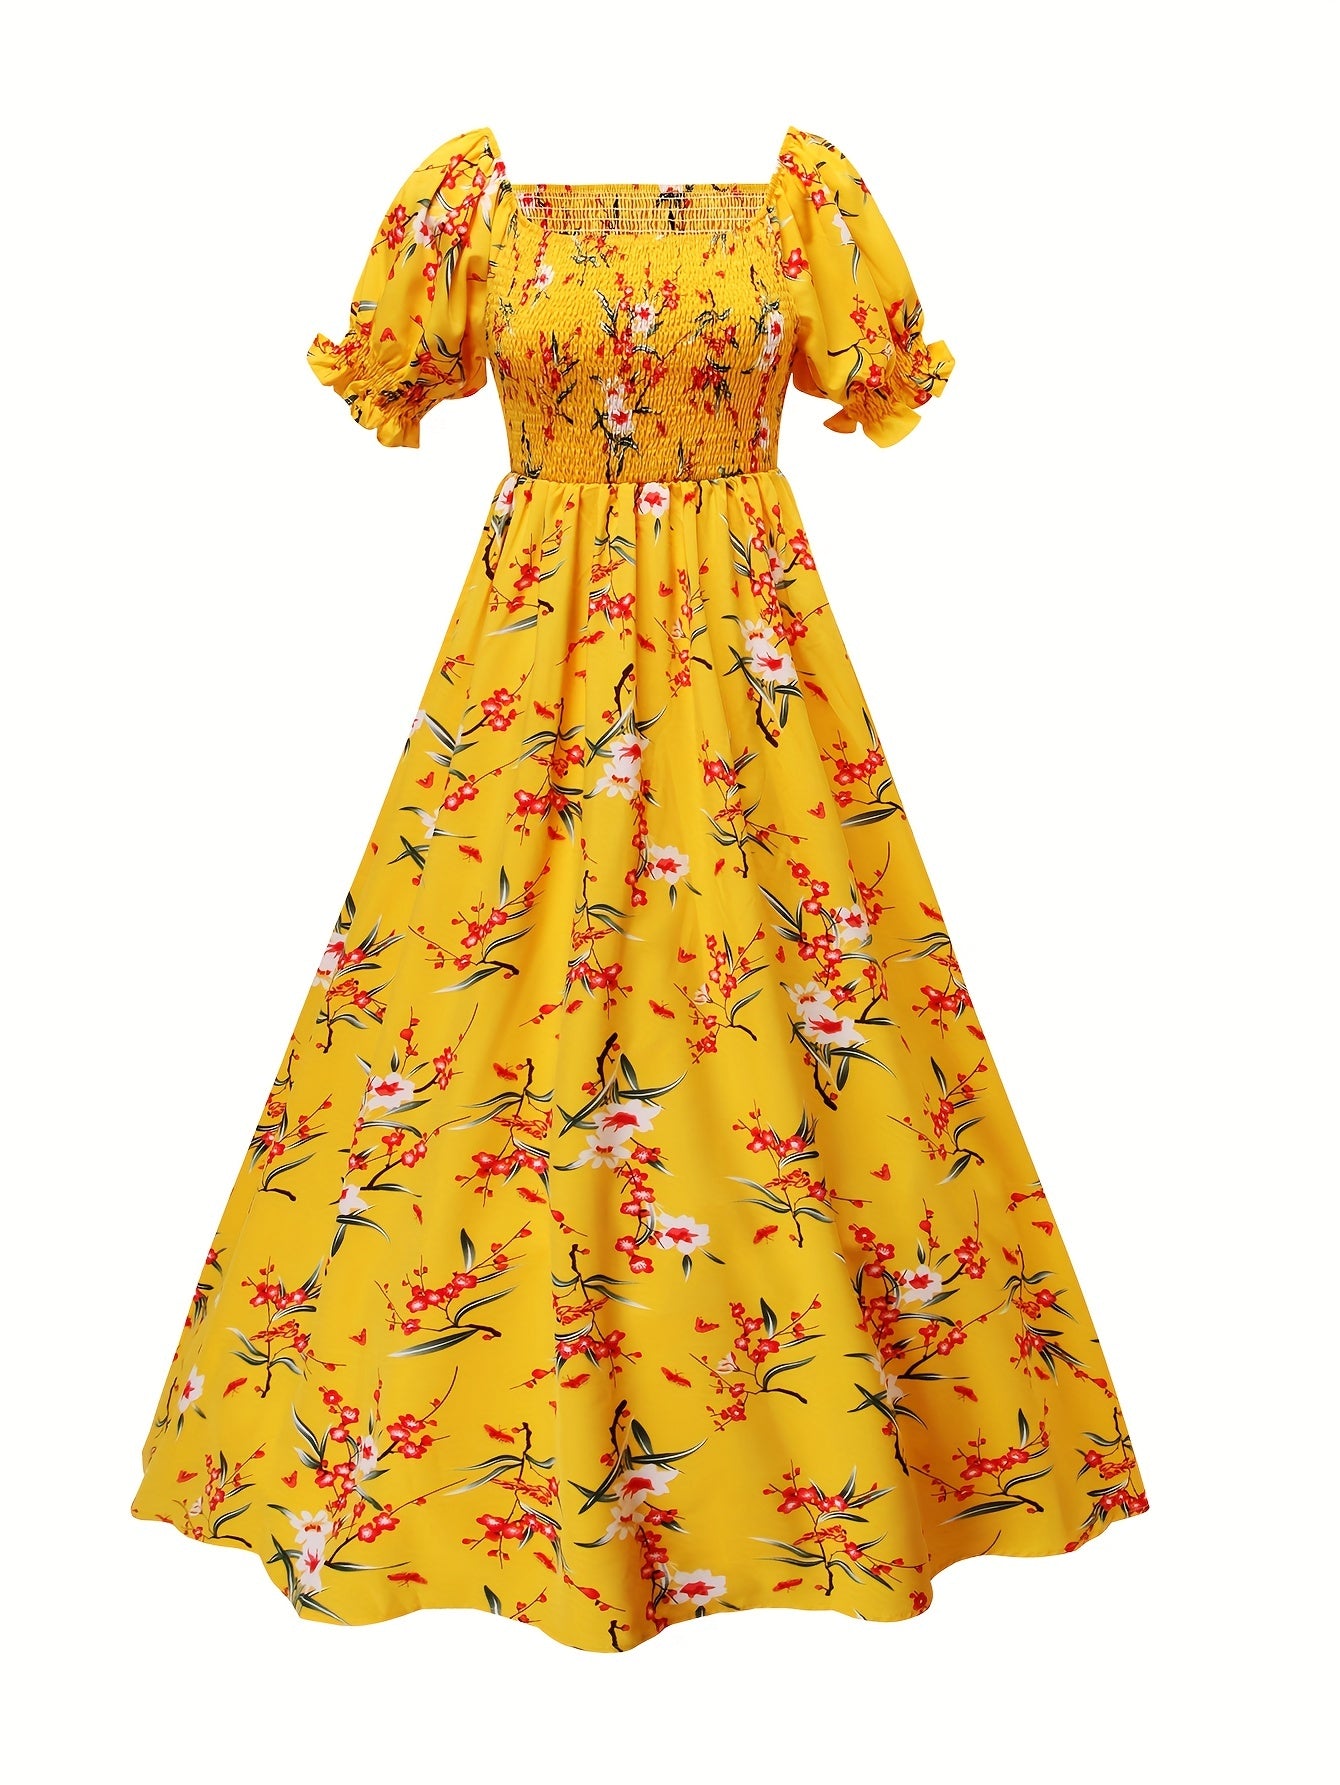 Floral Print Square Neck Shirred Dress For Spring & Summer, Elegant Short Sleeve Dress, Women's Clothing